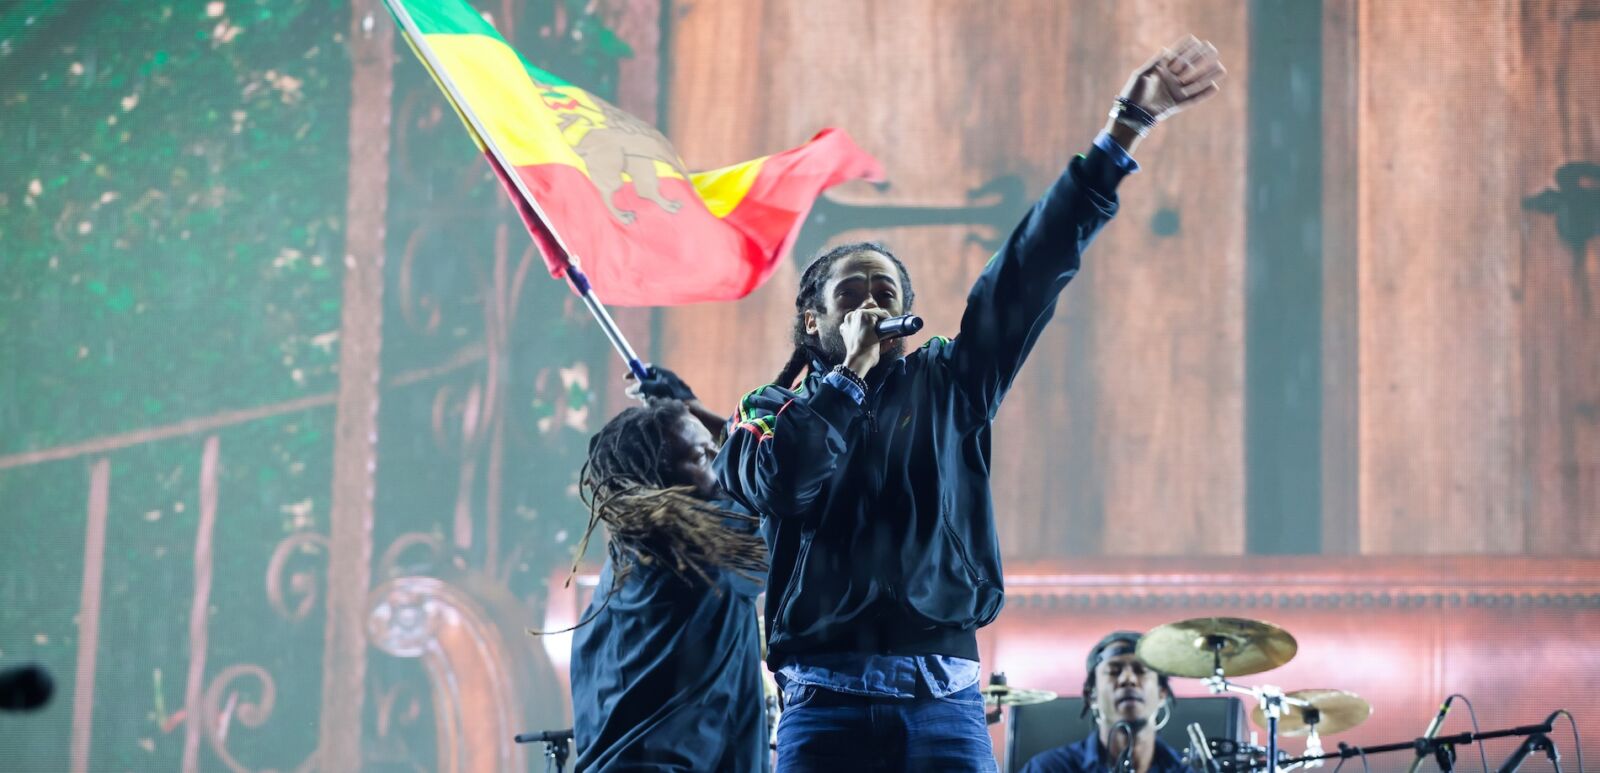 Jamaican reggae artist Damian "Jr. Gong" Marley, son of Bob Marley, performing live.